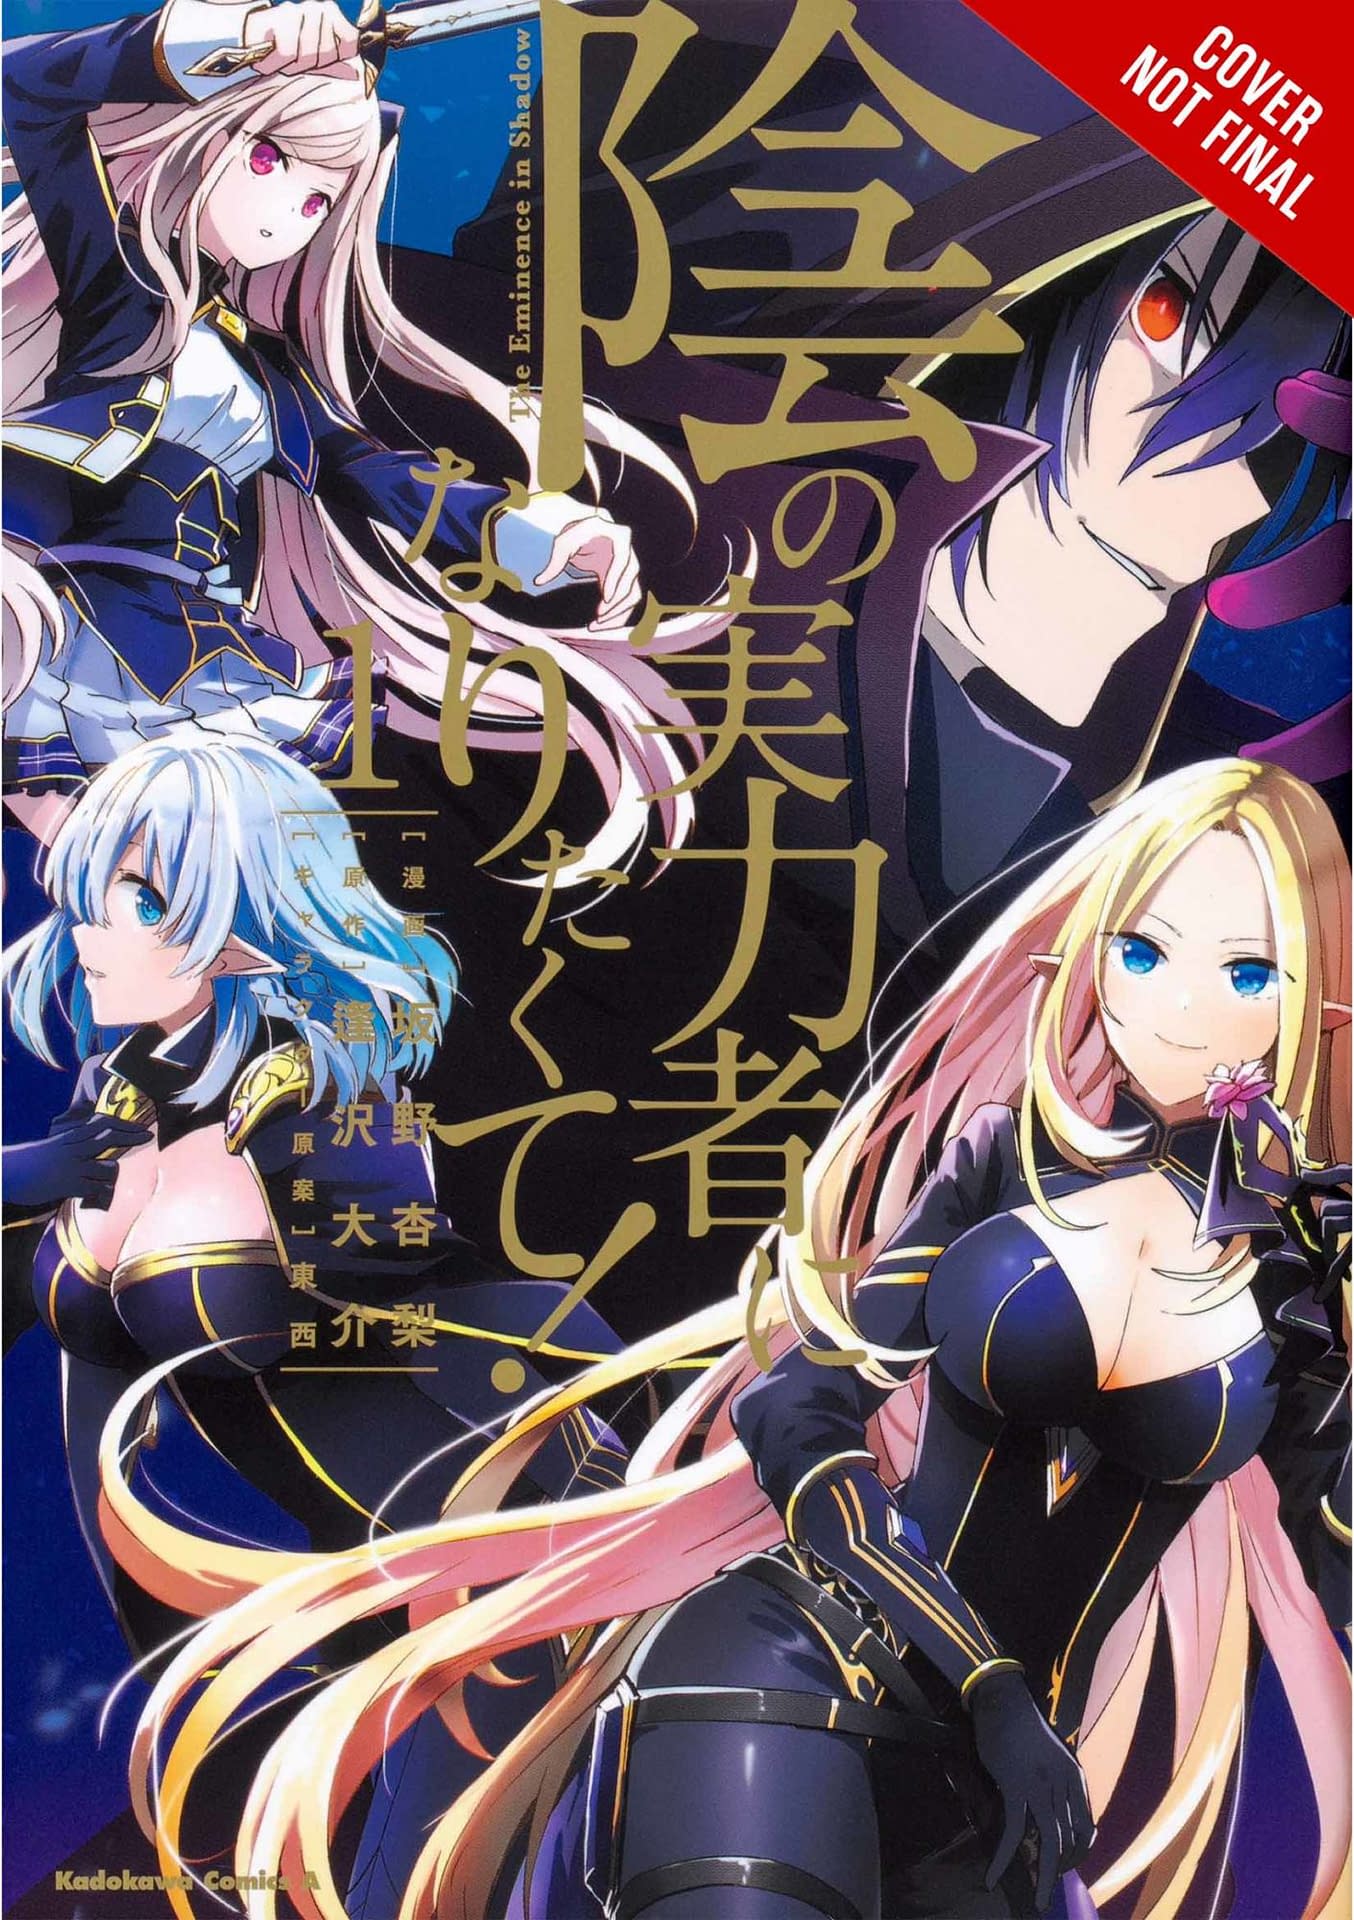 Daisuke Aizawa's Isekai Fantasy Light Novel The Eminence in Shadow Gets TV  Anime Adaptation - Crunchyroll News